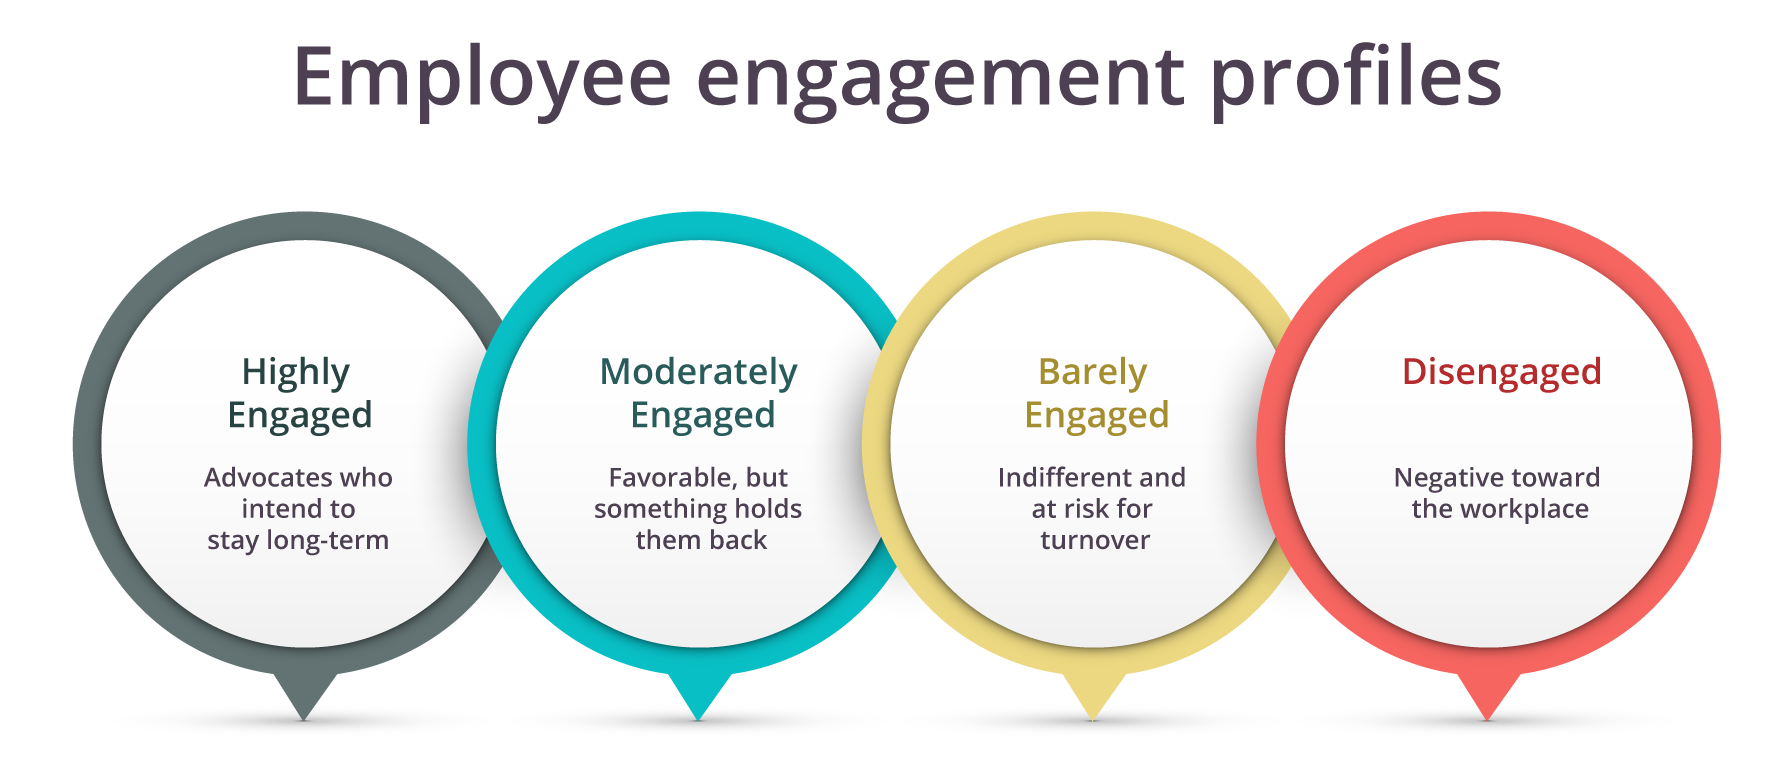 Employee engagement profiles